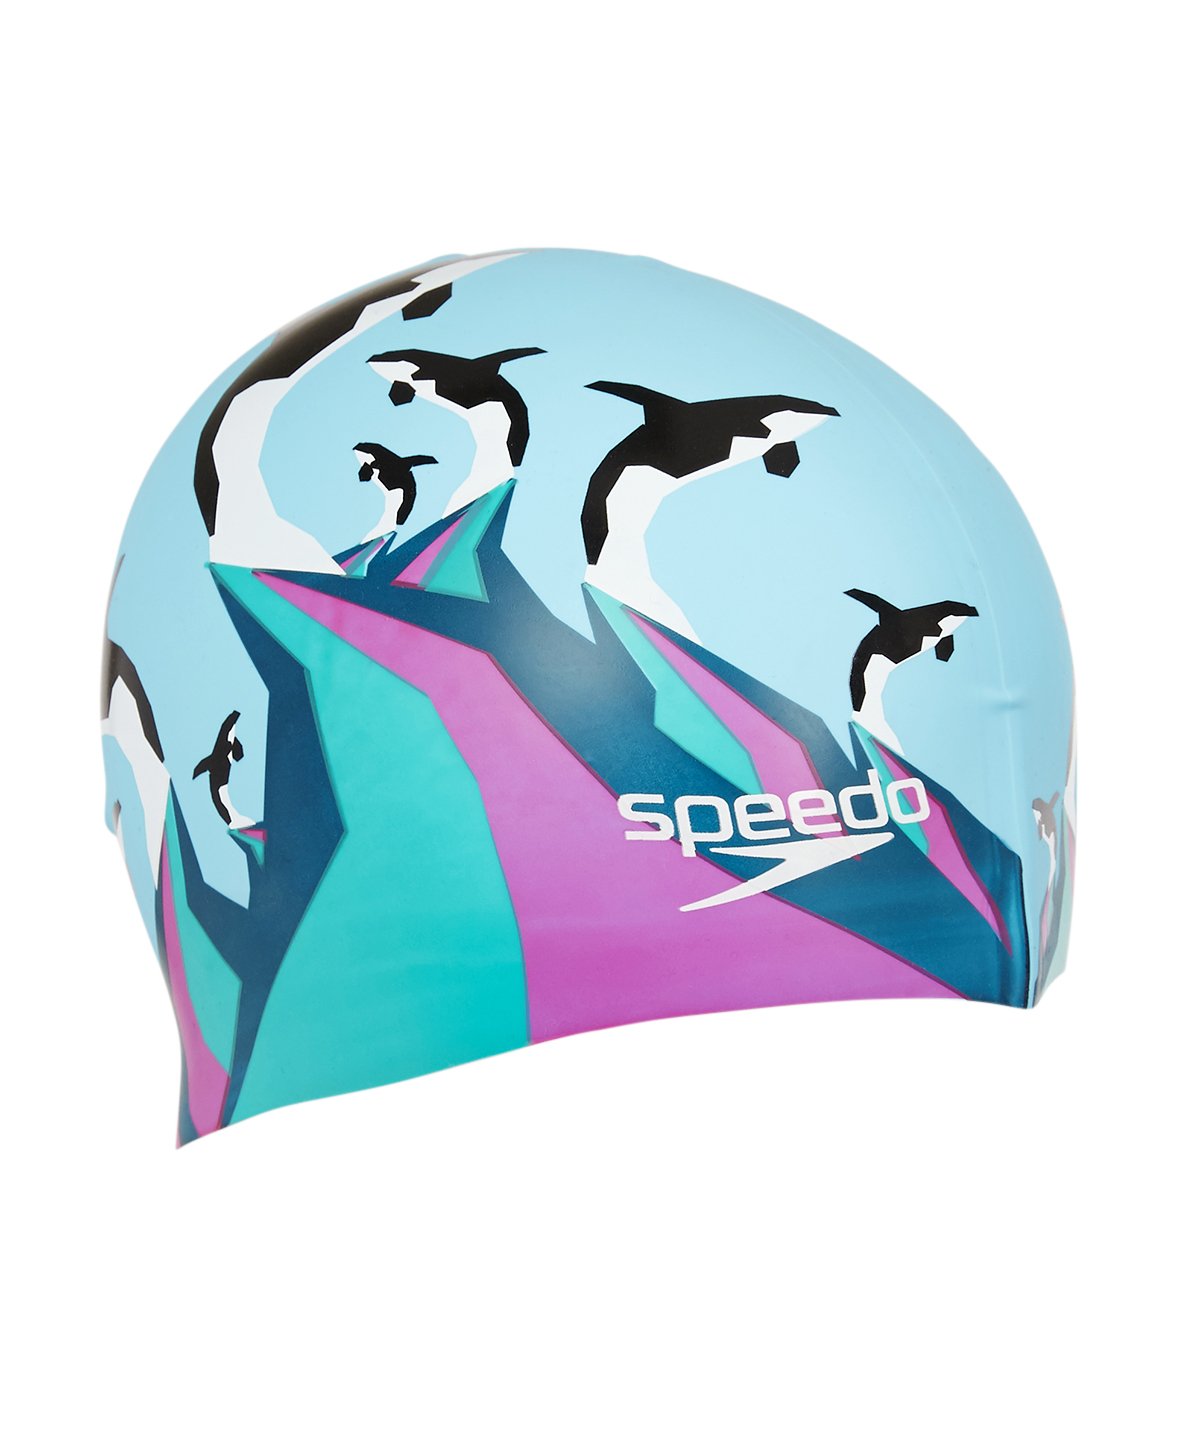 Speedo Unisex - Adult Slogan Print Swimcap - Best Price online Prokicksports.com